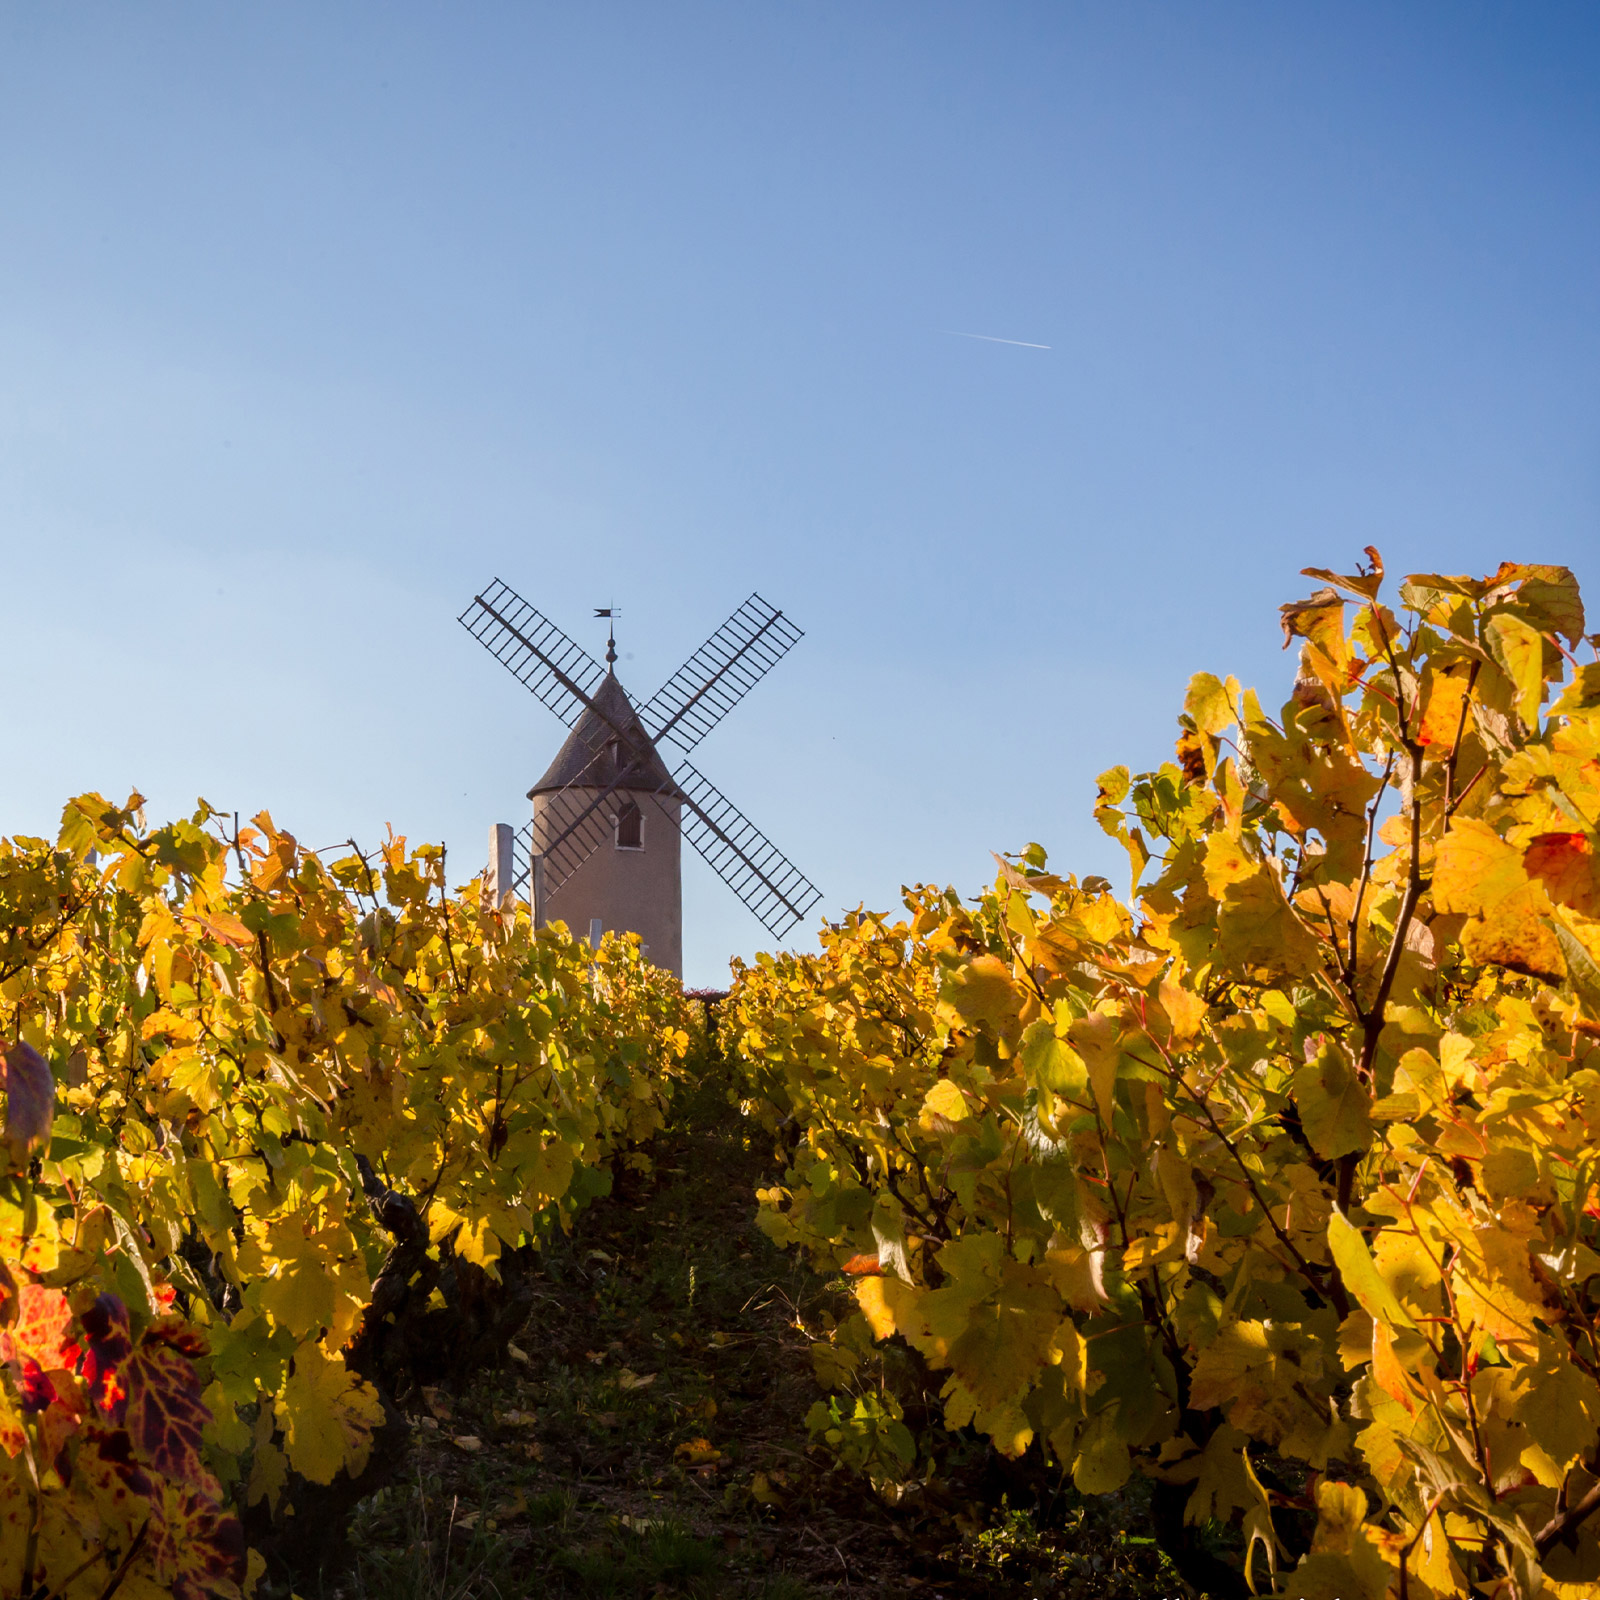 A windmill in a wine vineyard